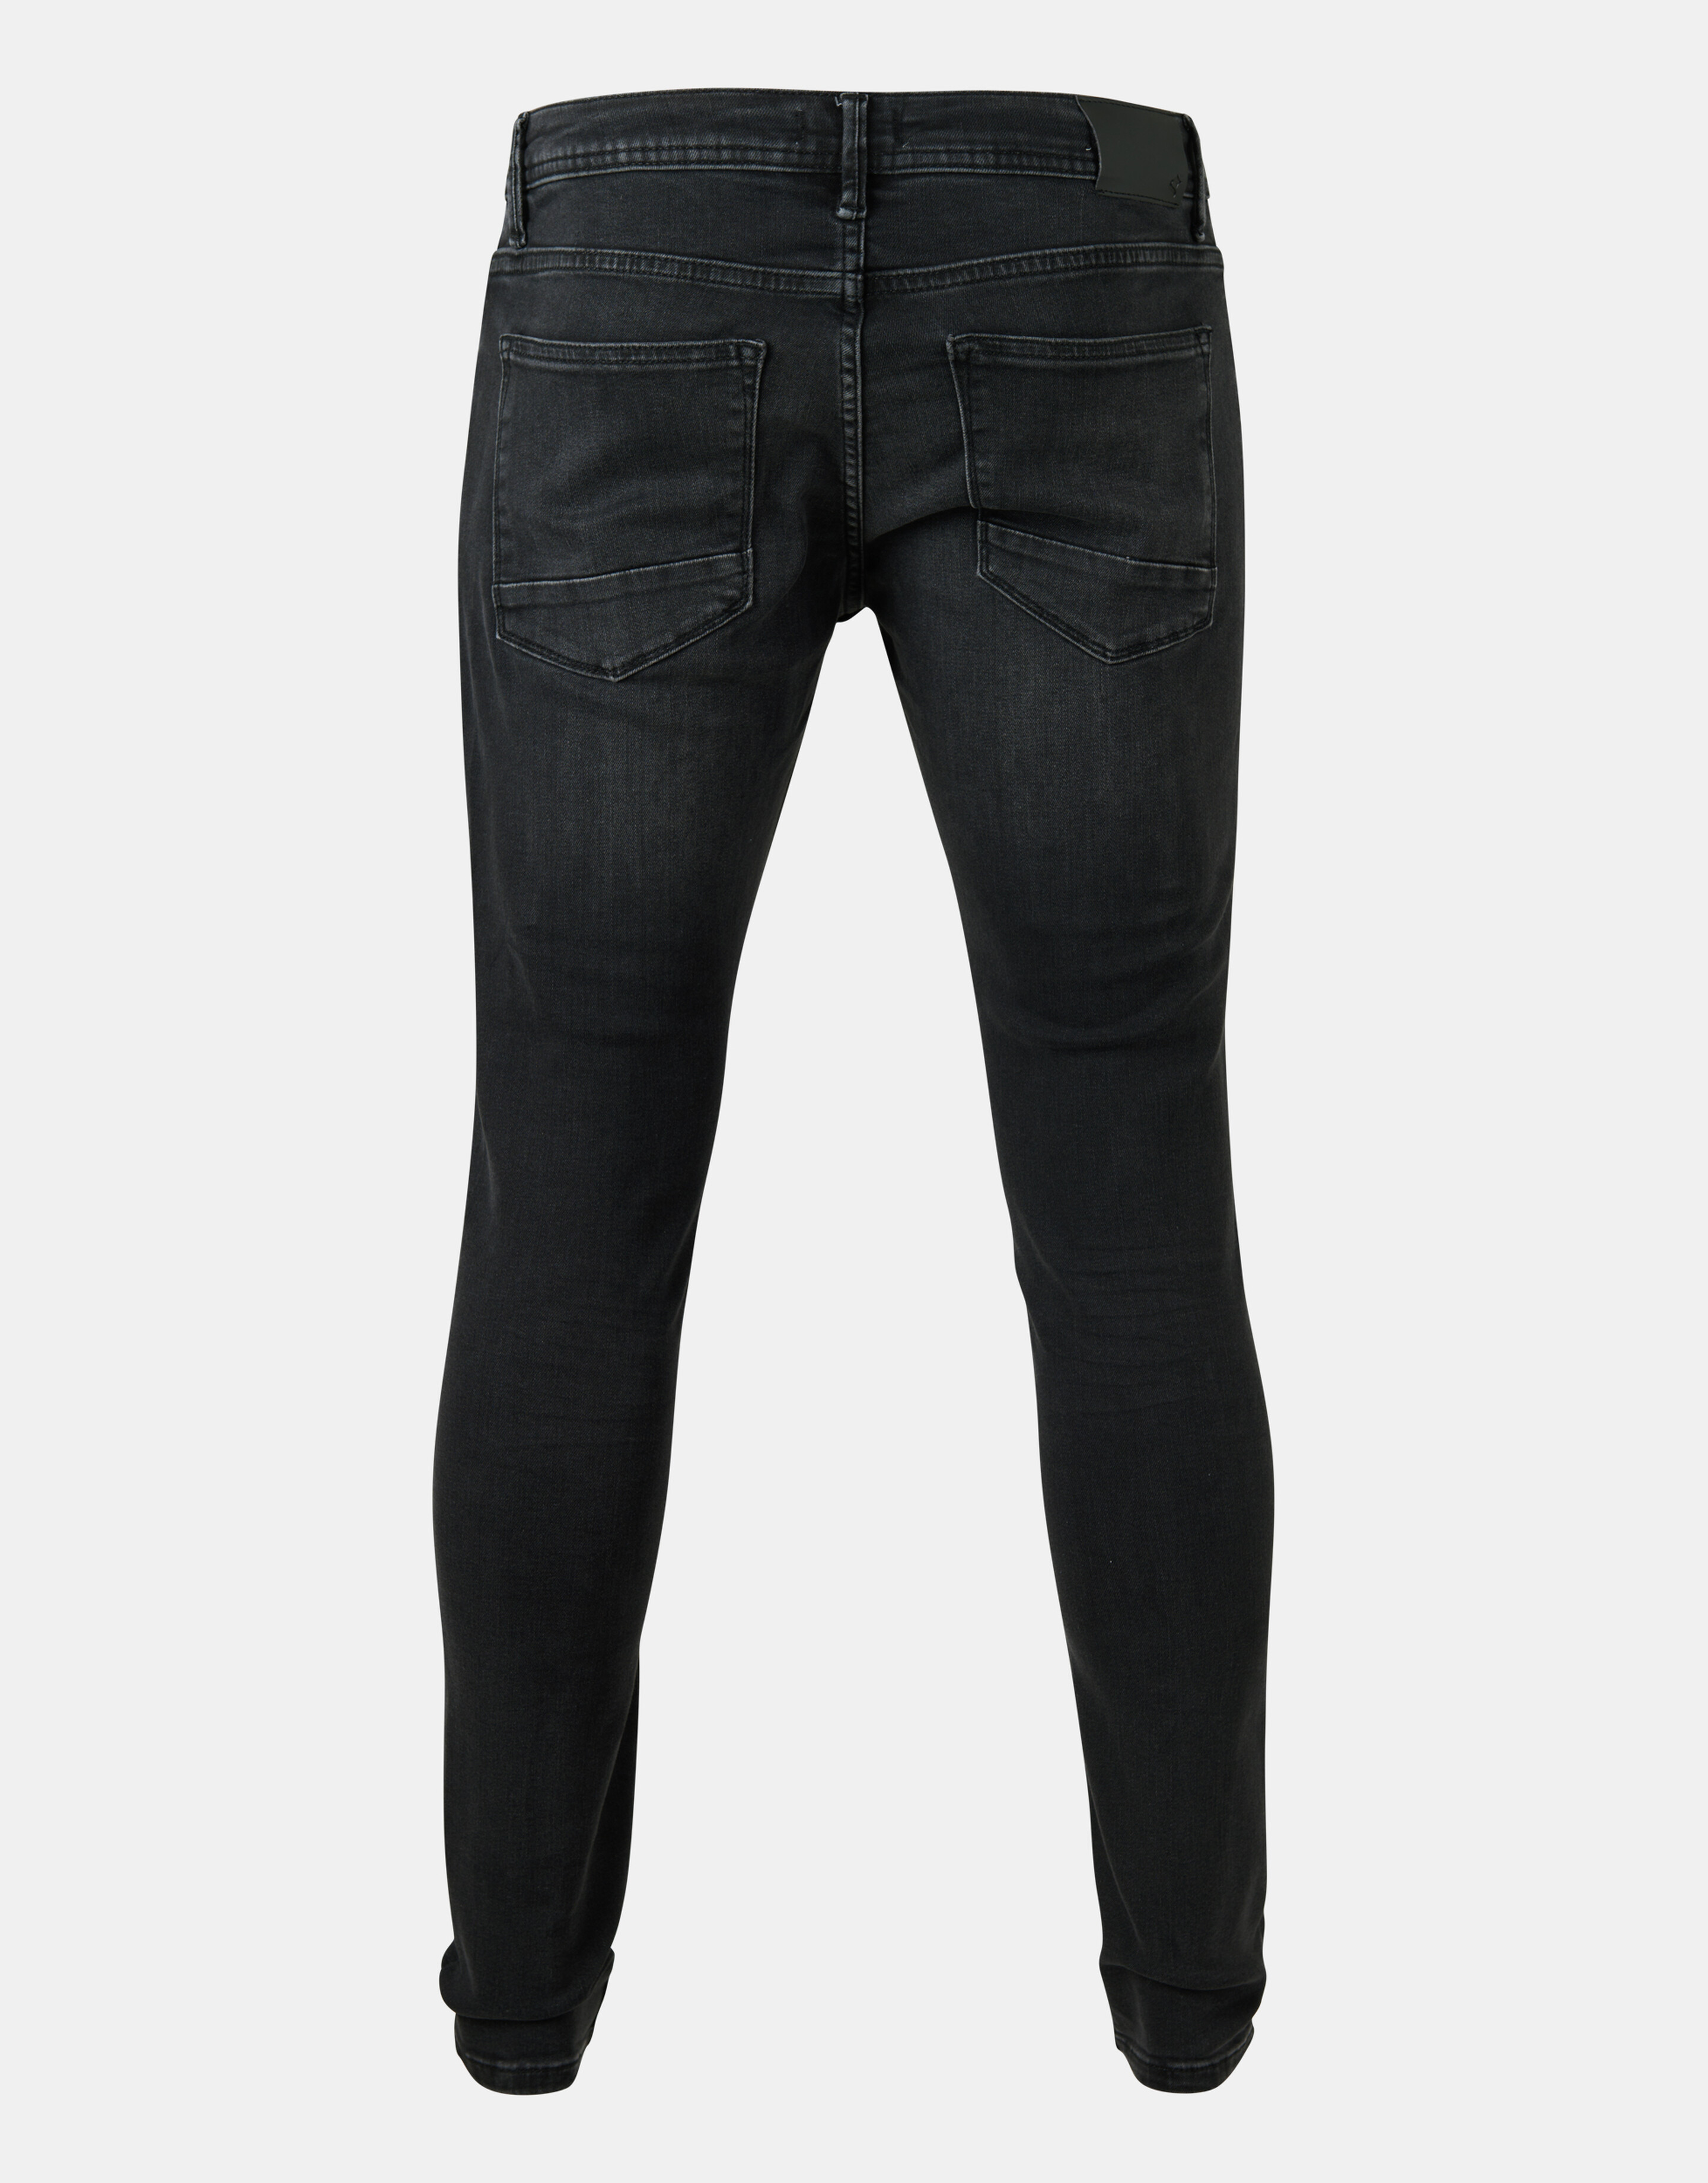 Skinny Jeans Schwarz Länge 34 Refill